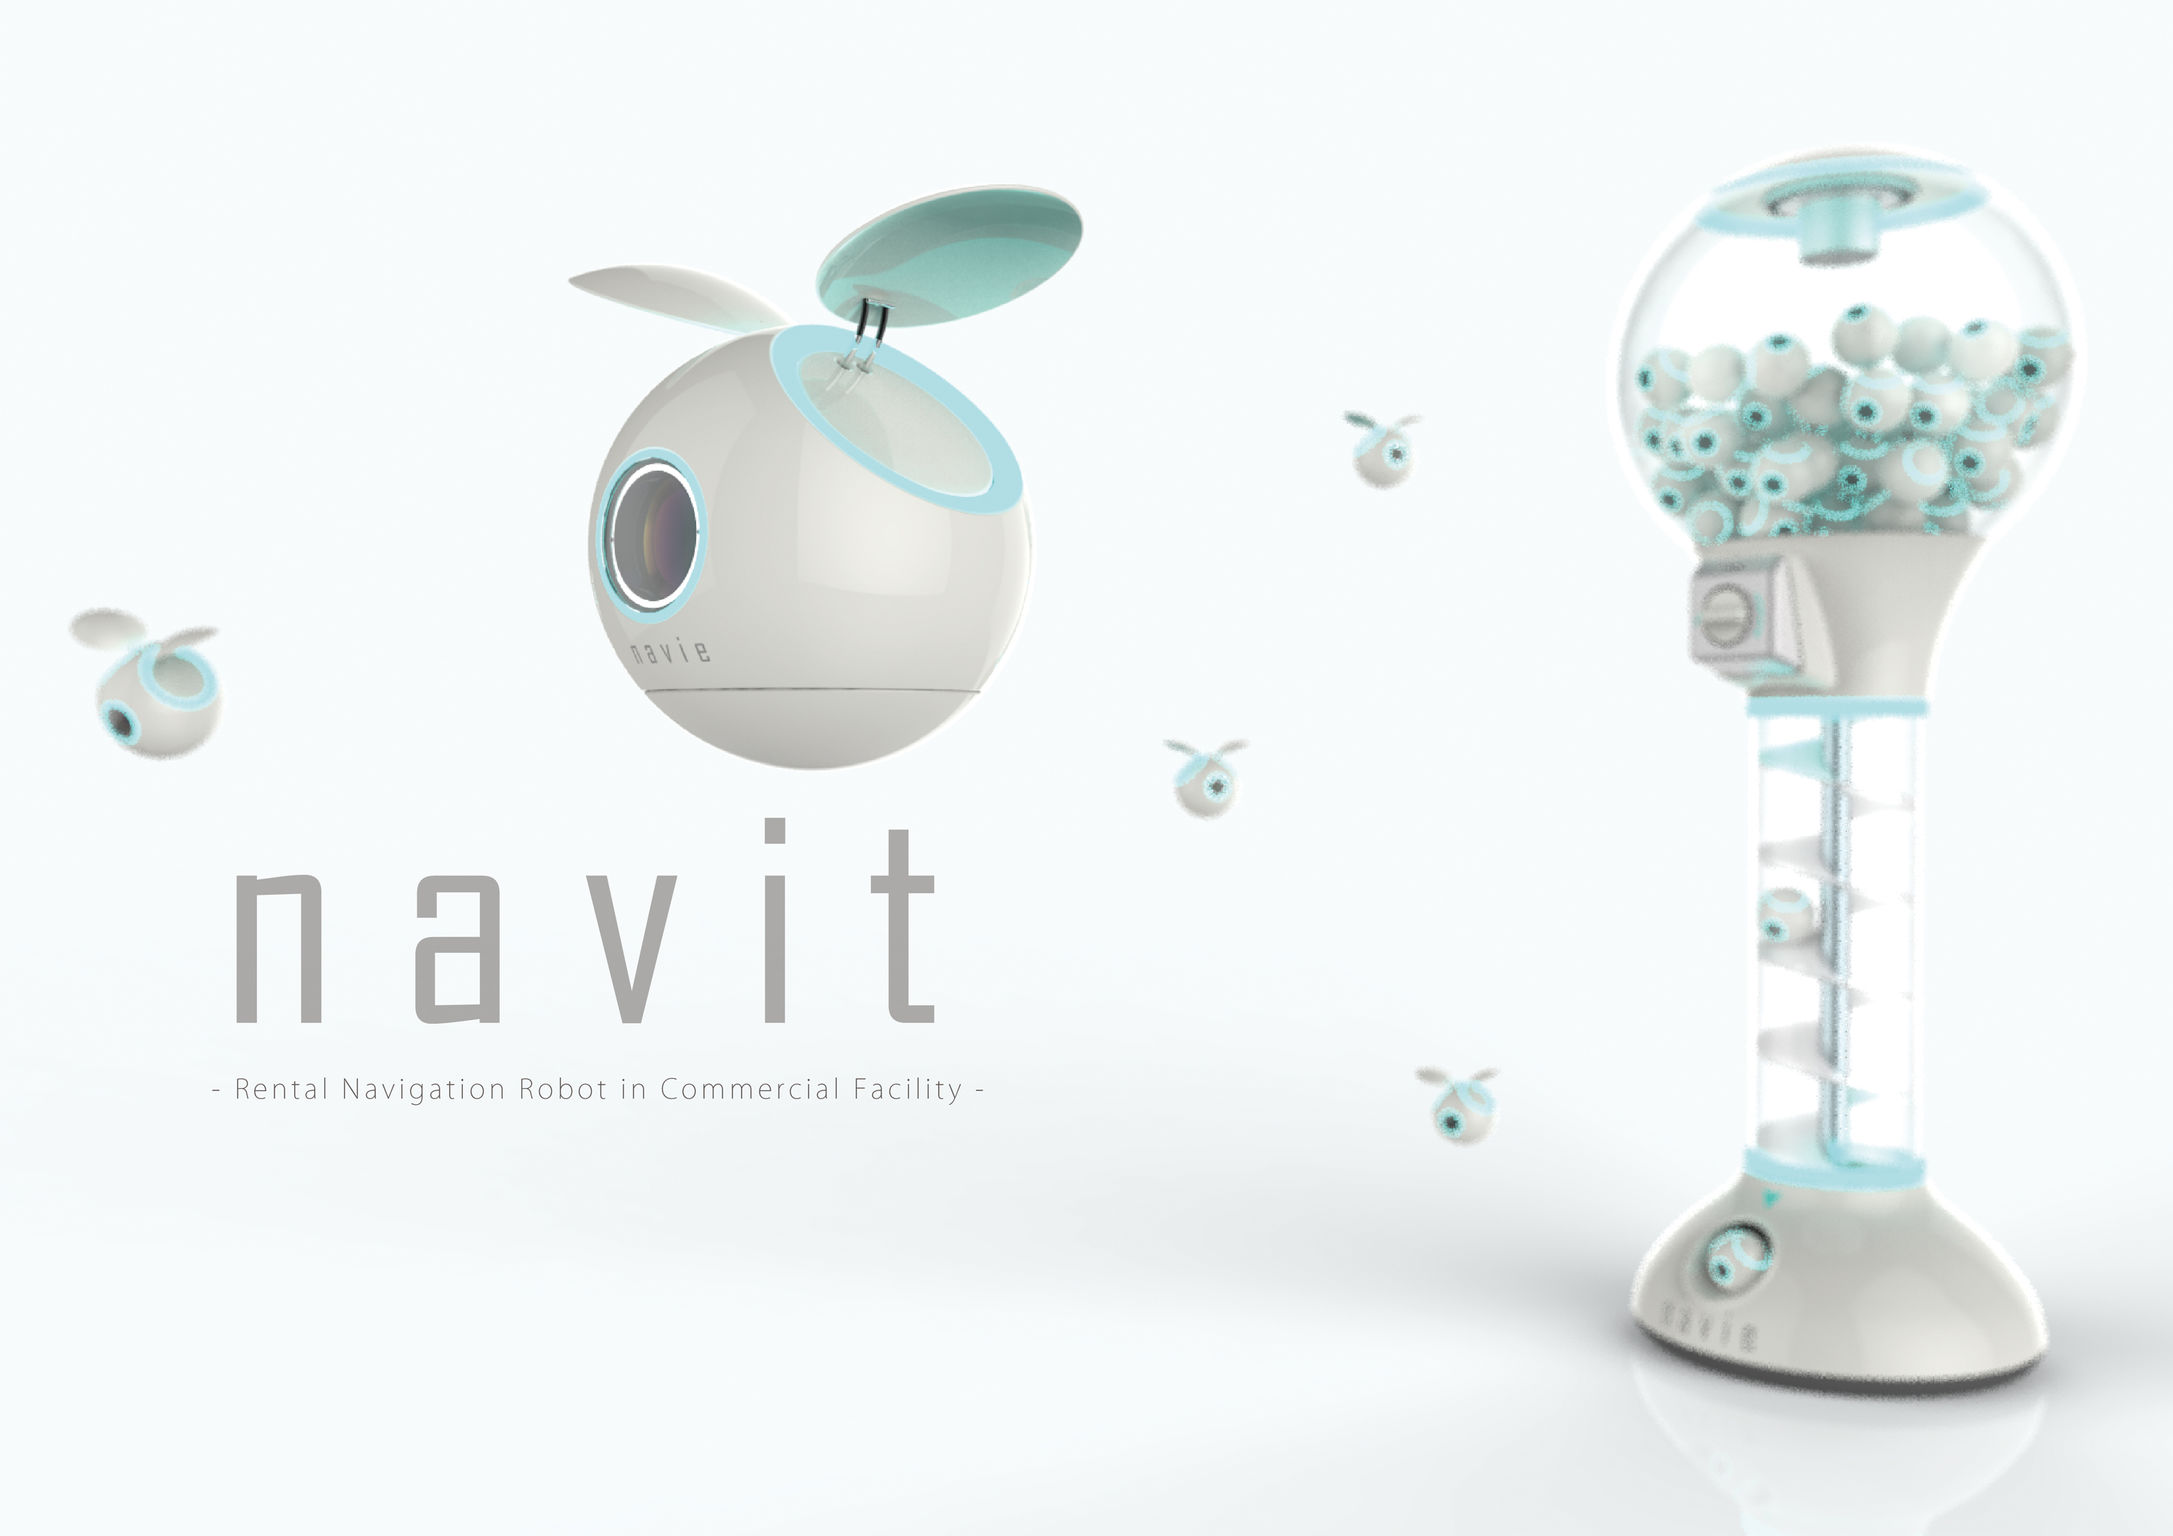 navit -the rental drone-